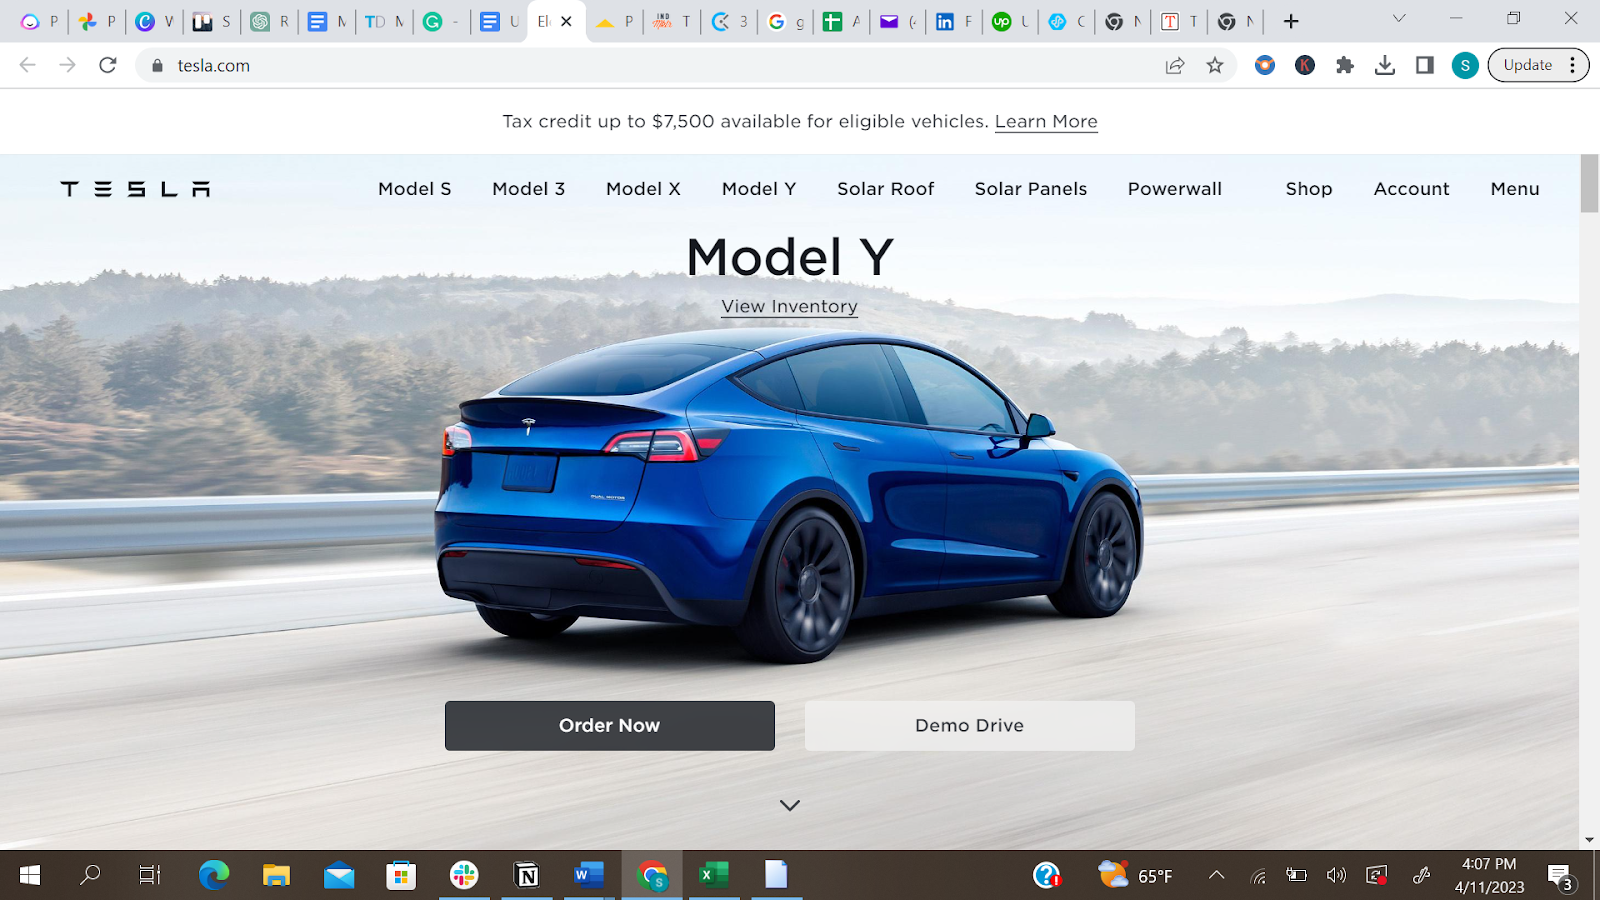 A representation of Tesla's website design